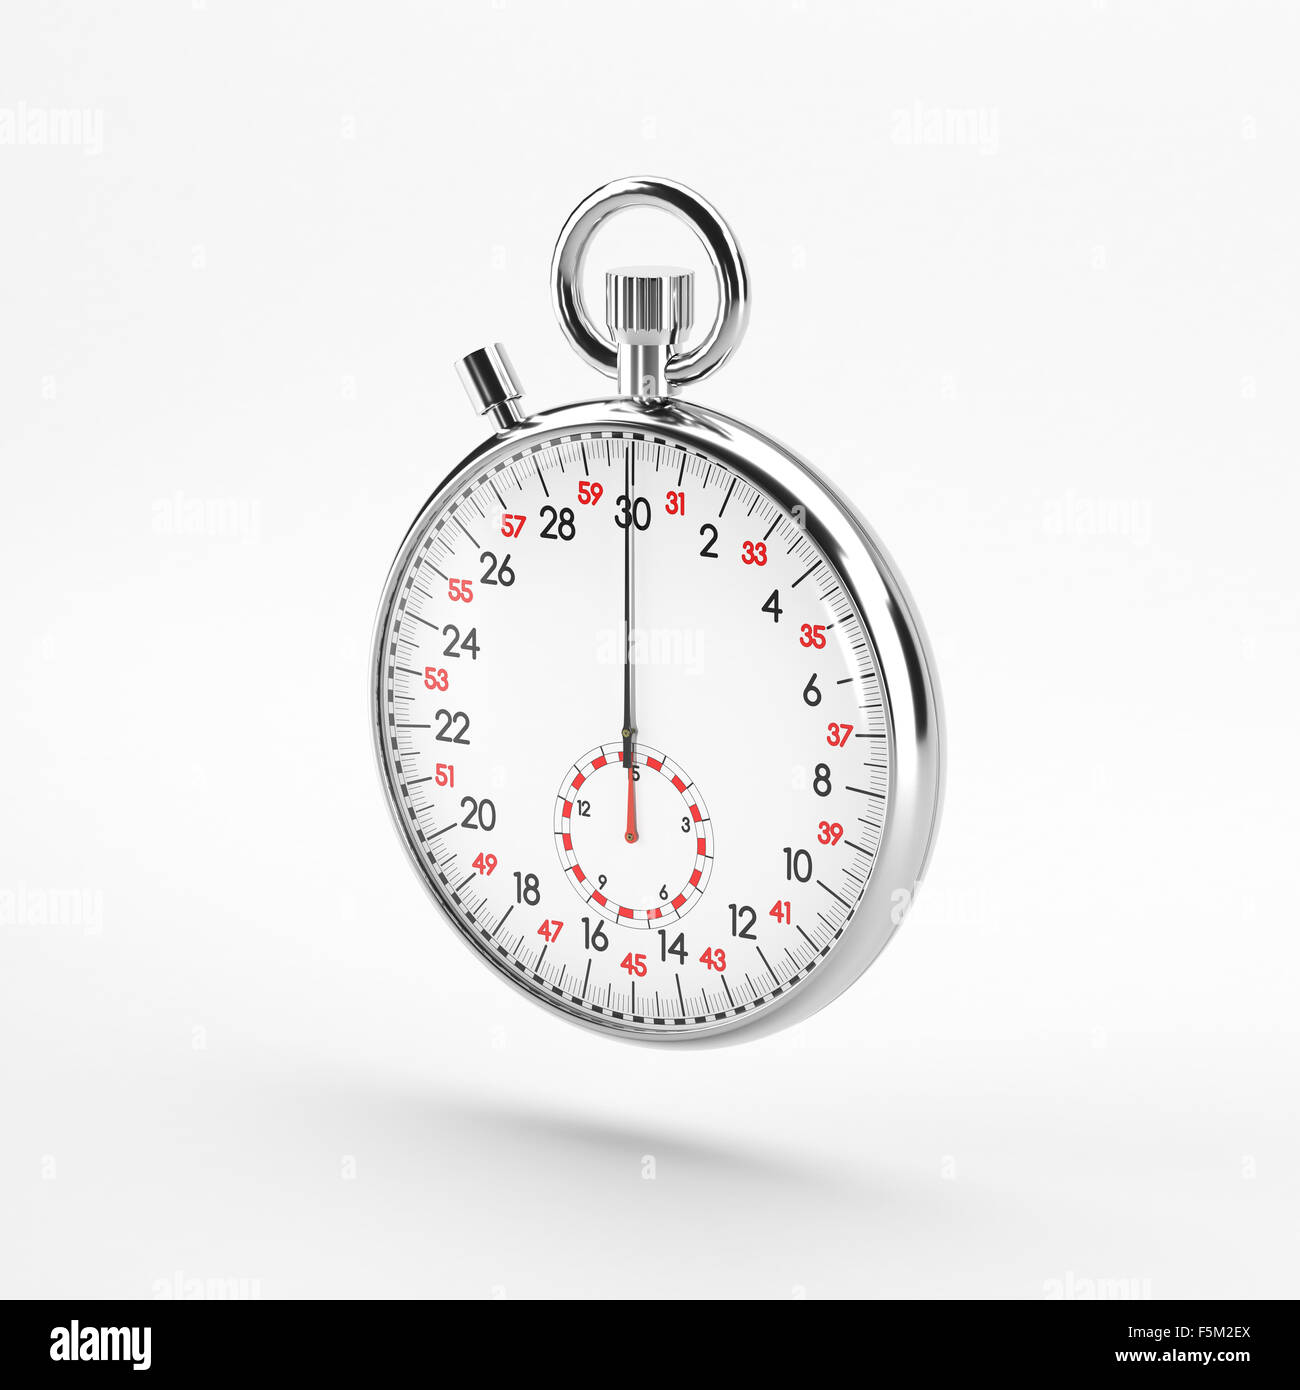 Mechanical stopwatch illustration Stock Photo